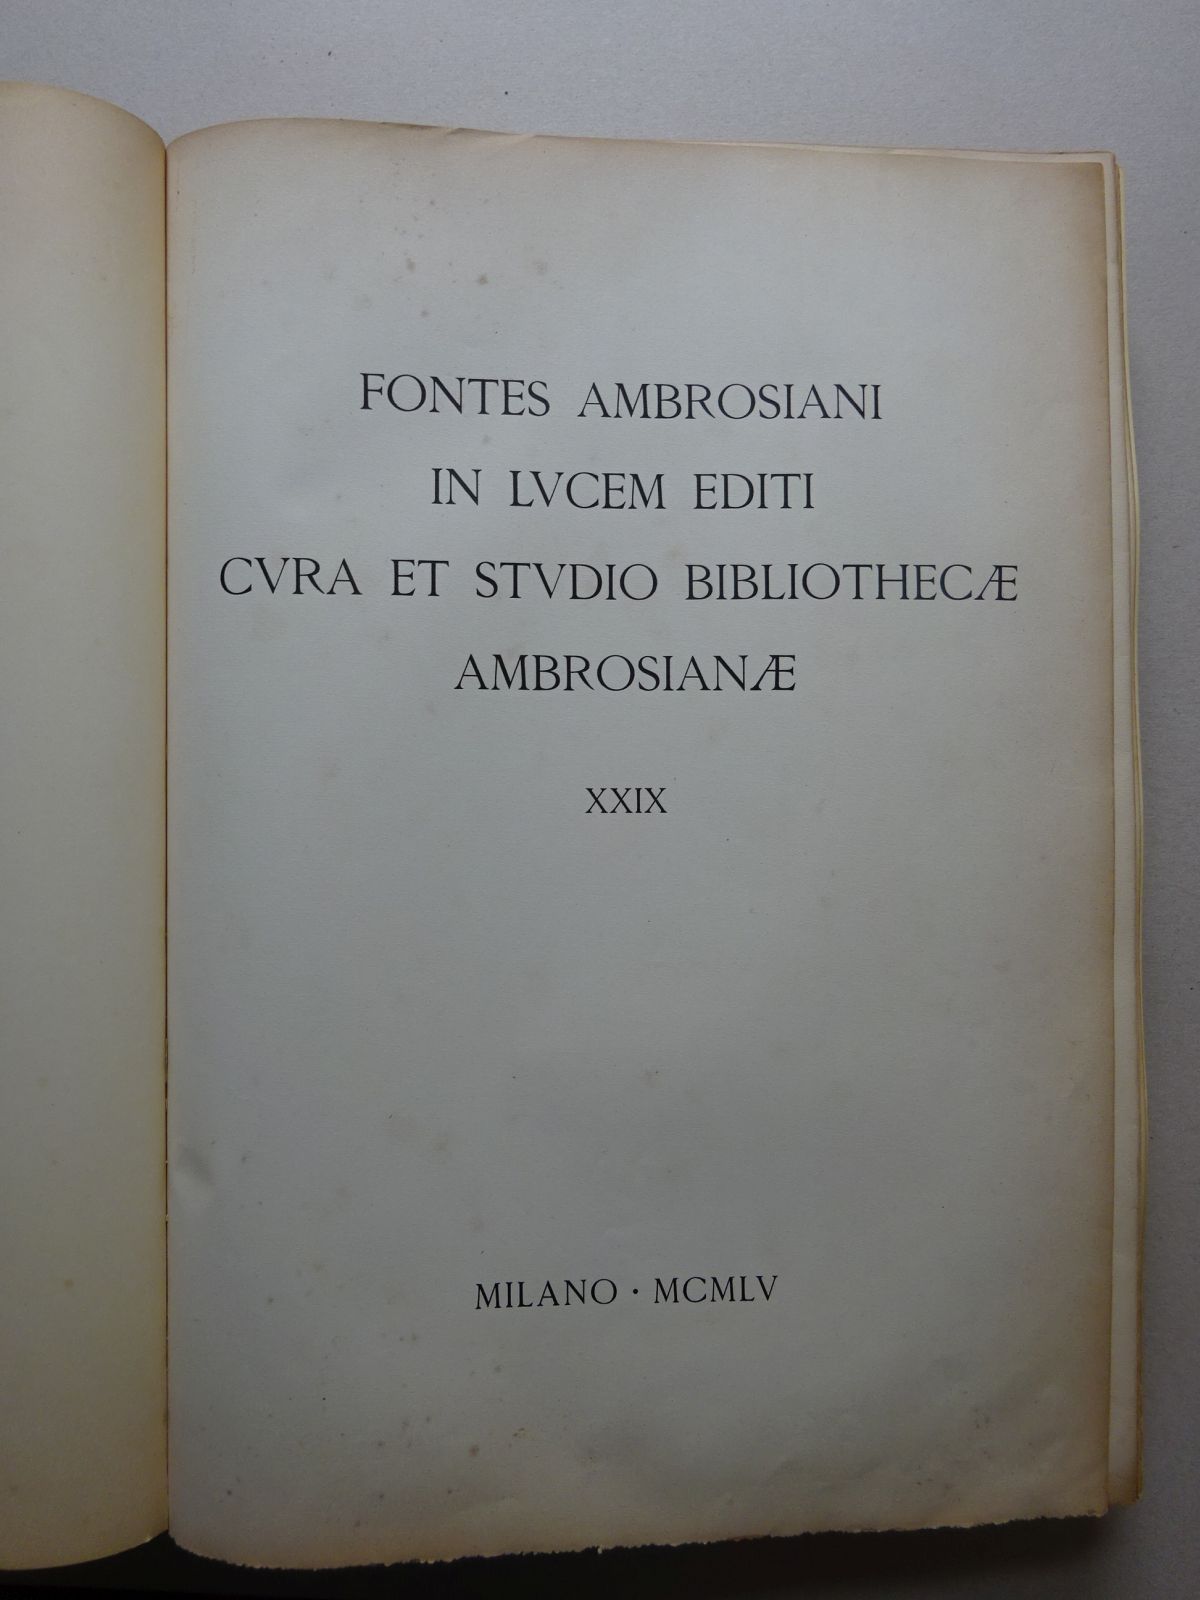 Codex Resta Fontes Ambrosiani Faks. - Image 7 of 10